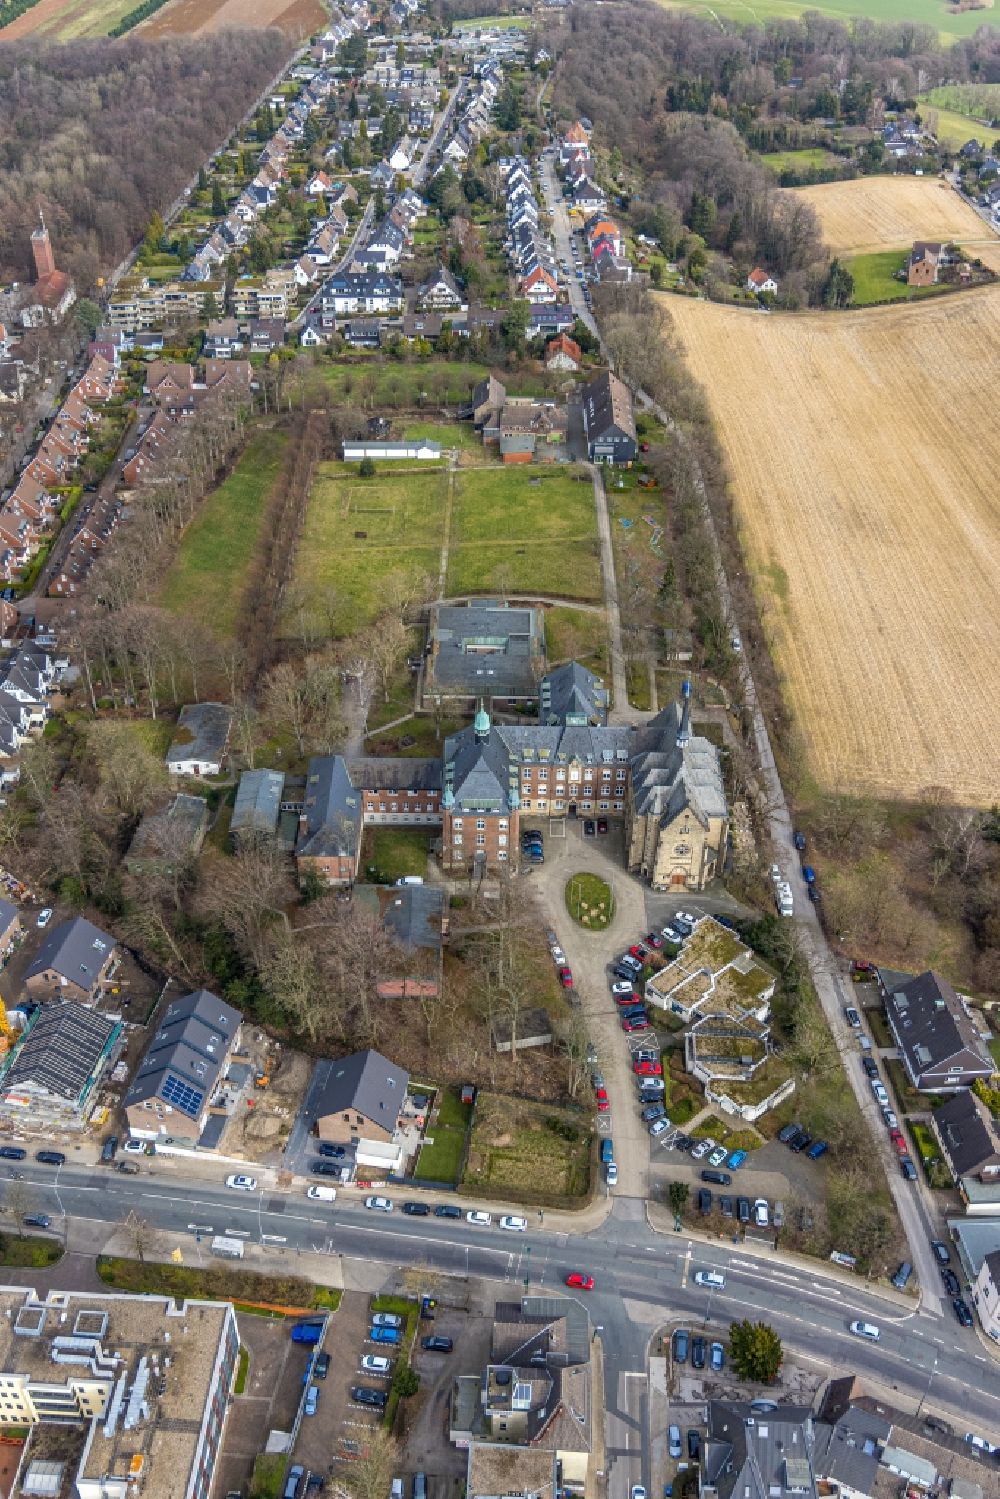 Aerial image Heidhausen - Hospital grounds of the Clinic of Fachklinik Kamillushaus Heidhausen on Heidhauser Strasse in Heidhausen at Ruhrgebiet in the state North Rhine-Westphalia, Germany